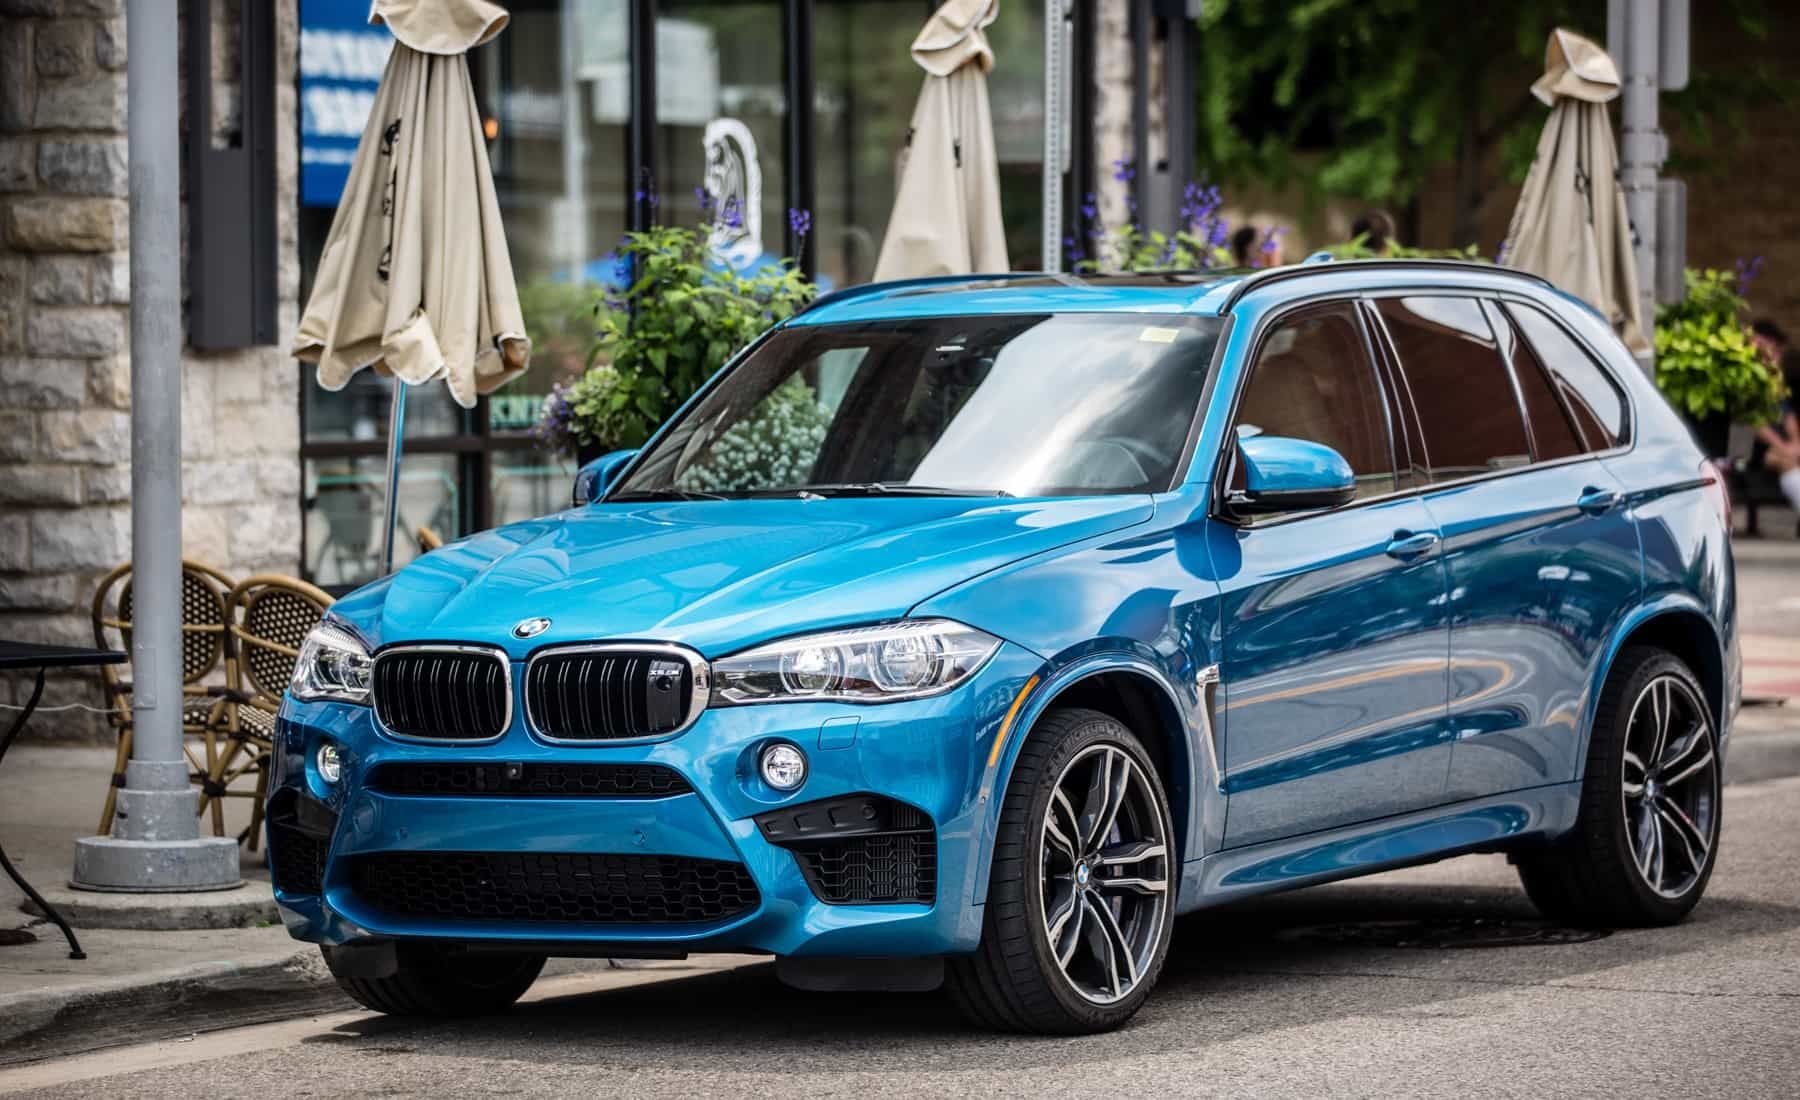 2017 BMW X5 M Exterior Blue Metallic (View 34 of 35)